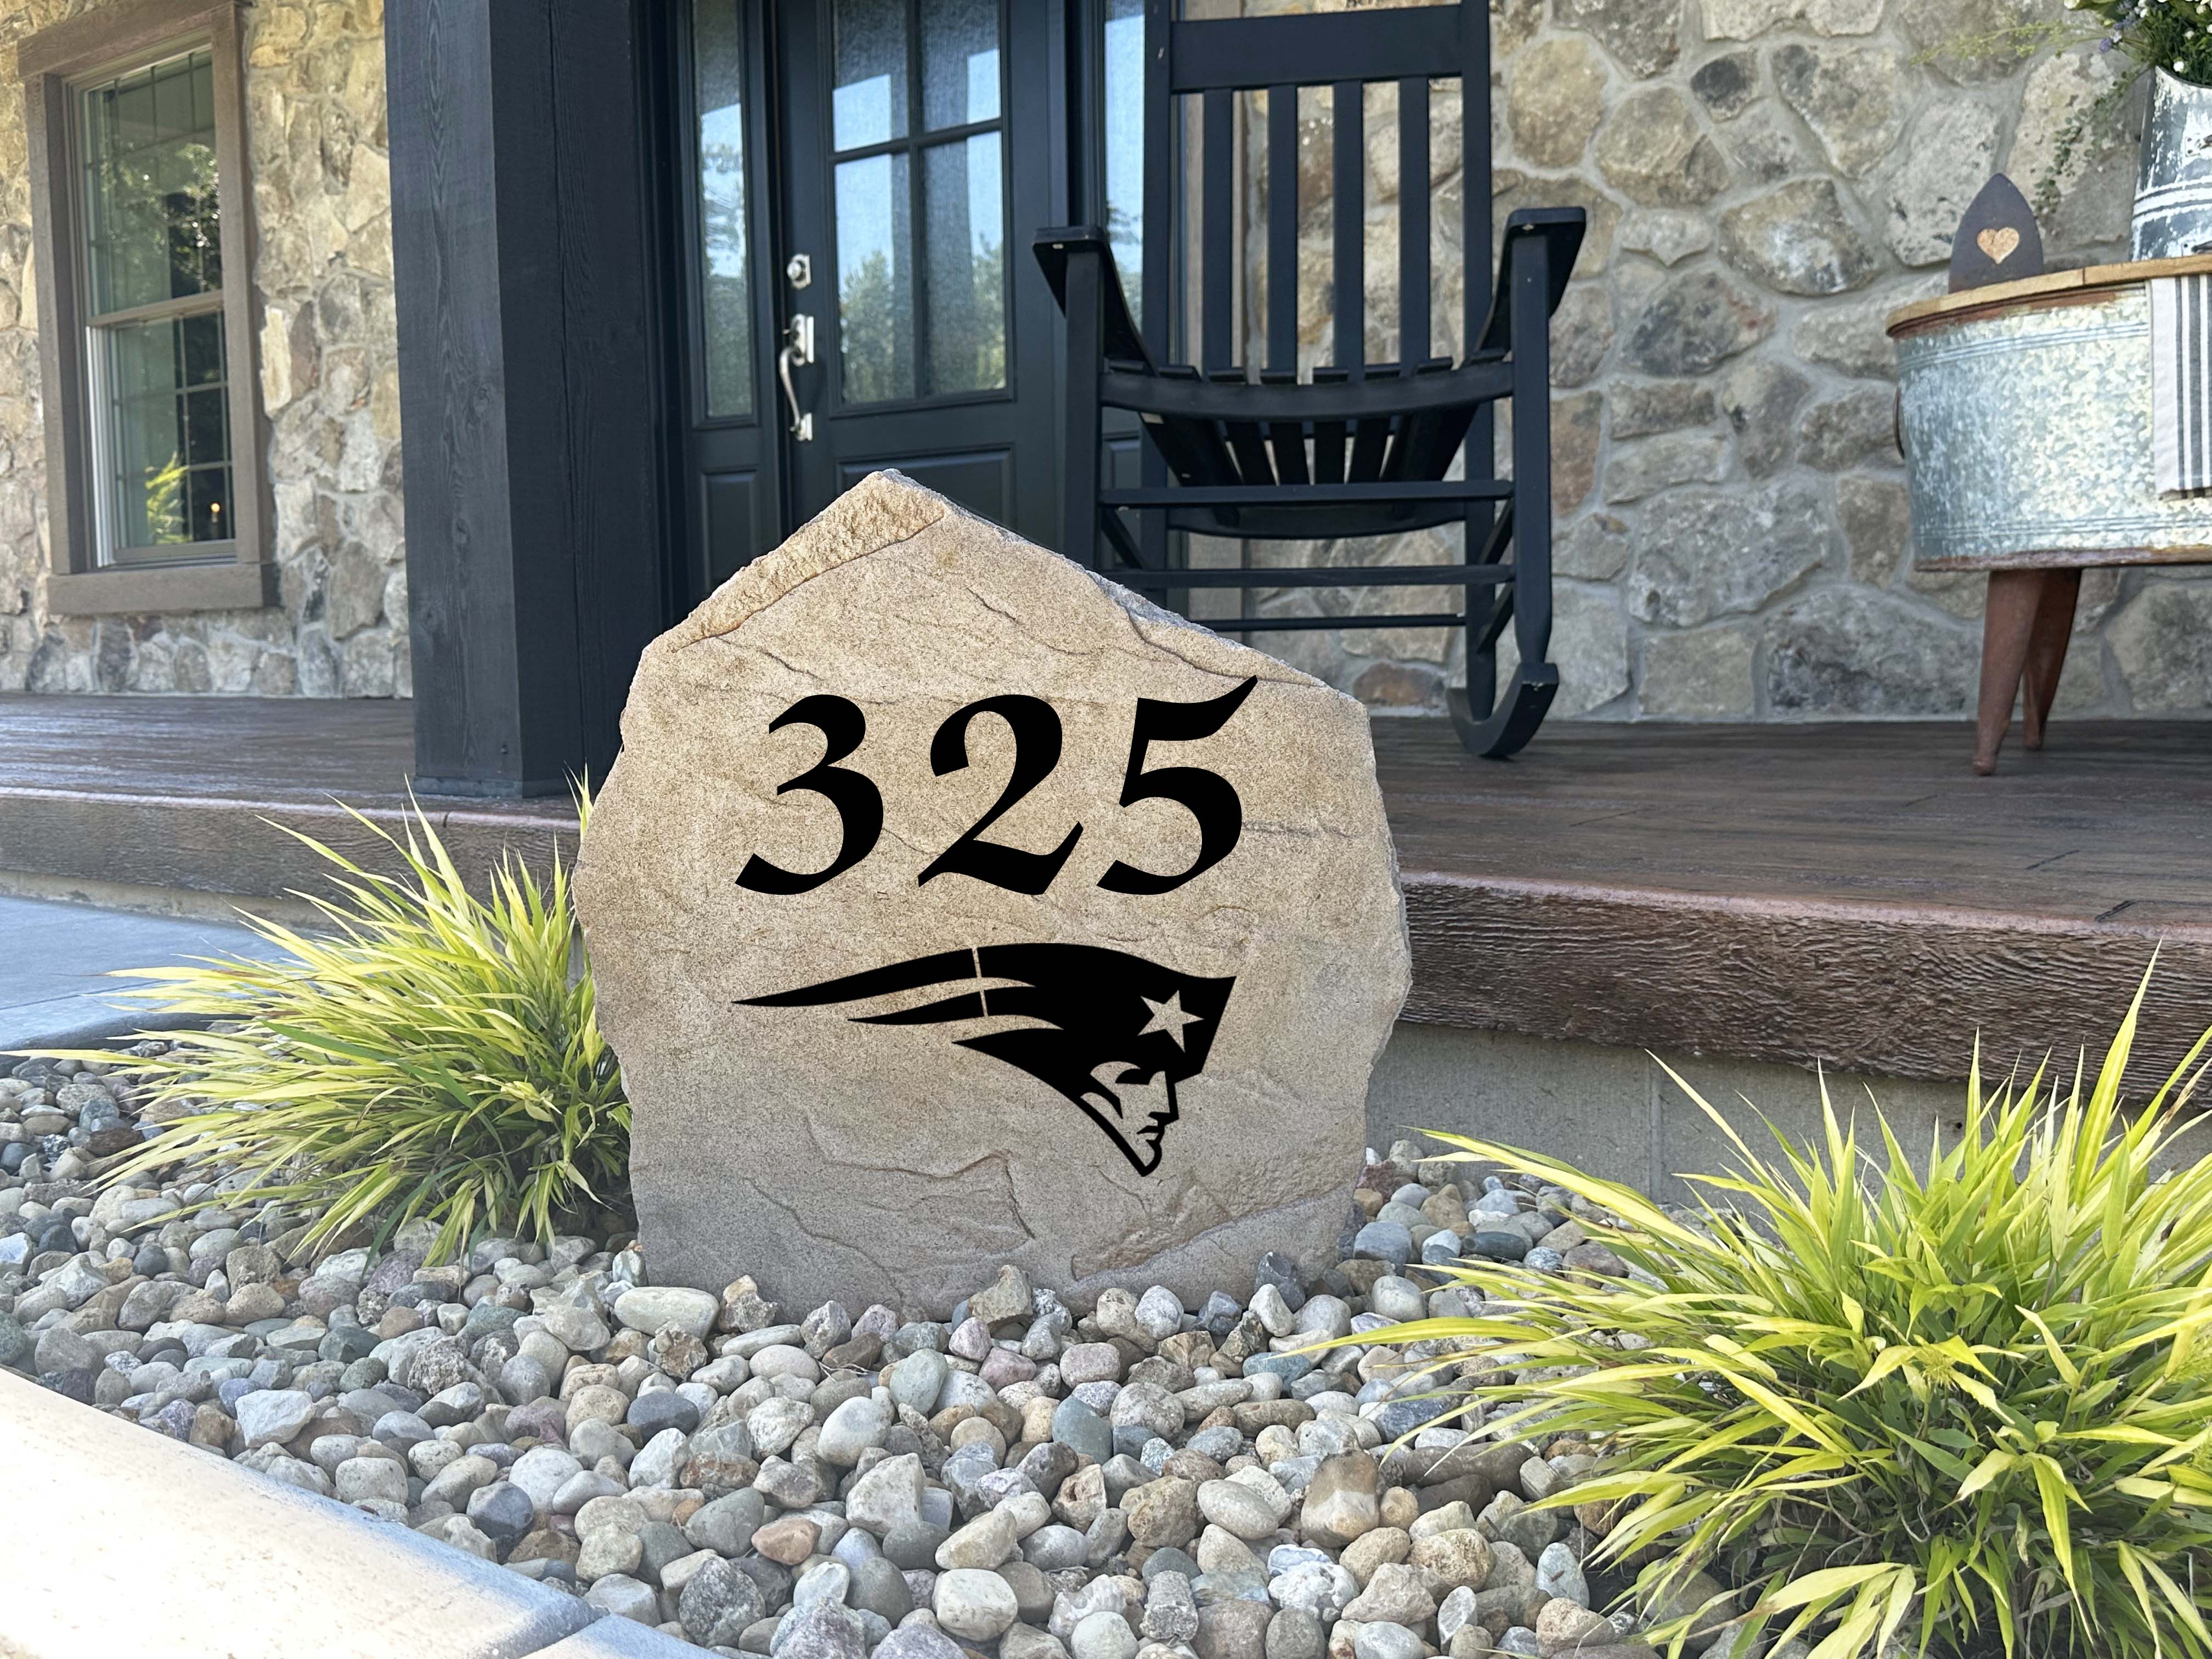 New England Patriots Design-A-Stone Landscape Art Address Stone